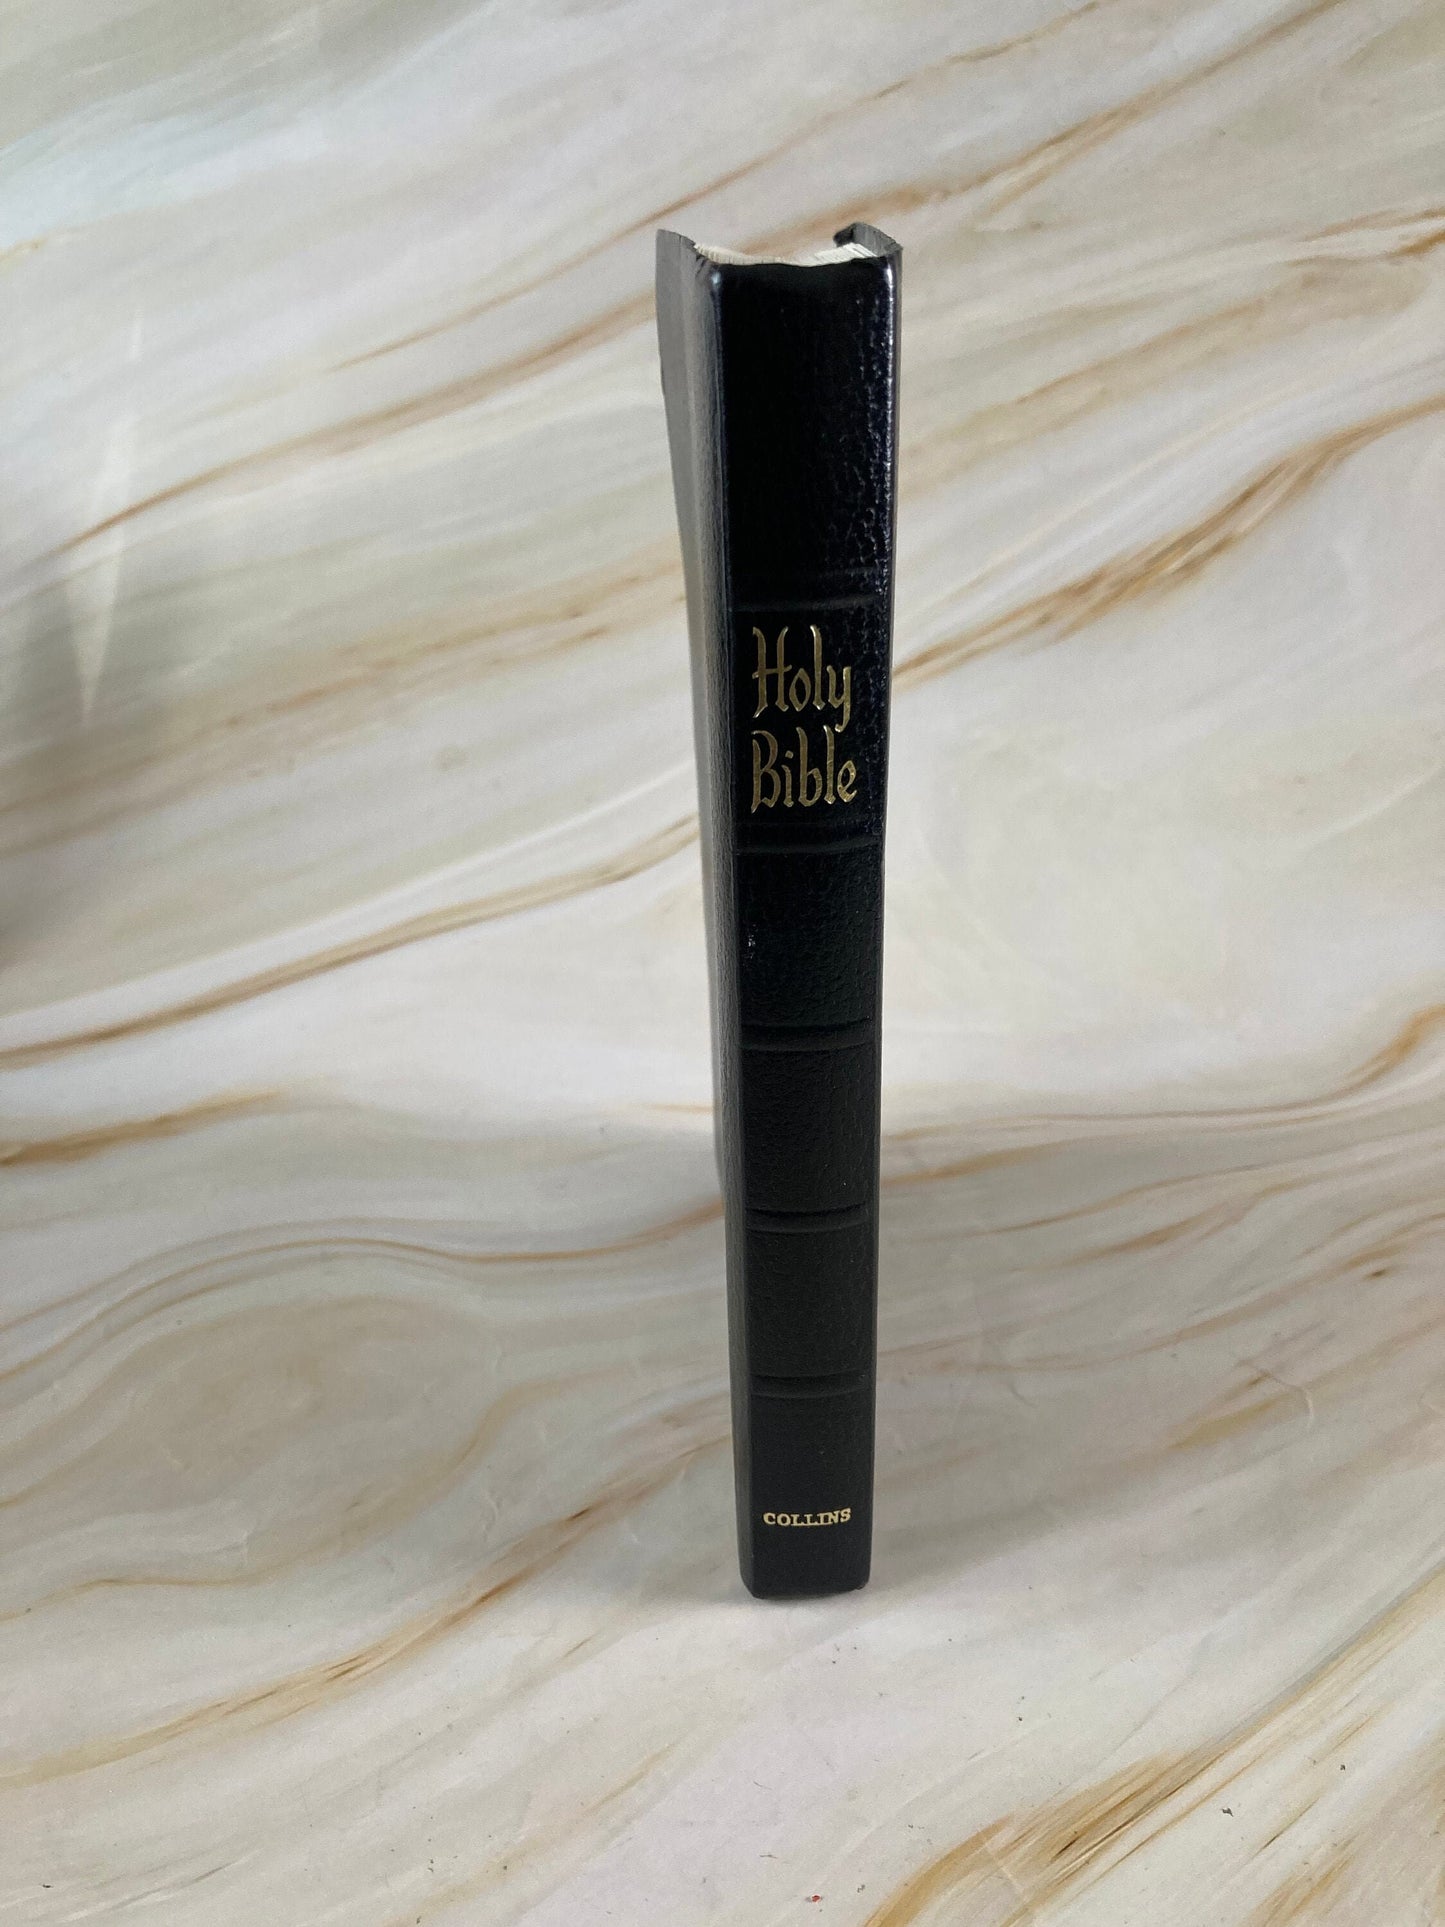 Holy bible dictionary concordance kjv black cover - (x171)